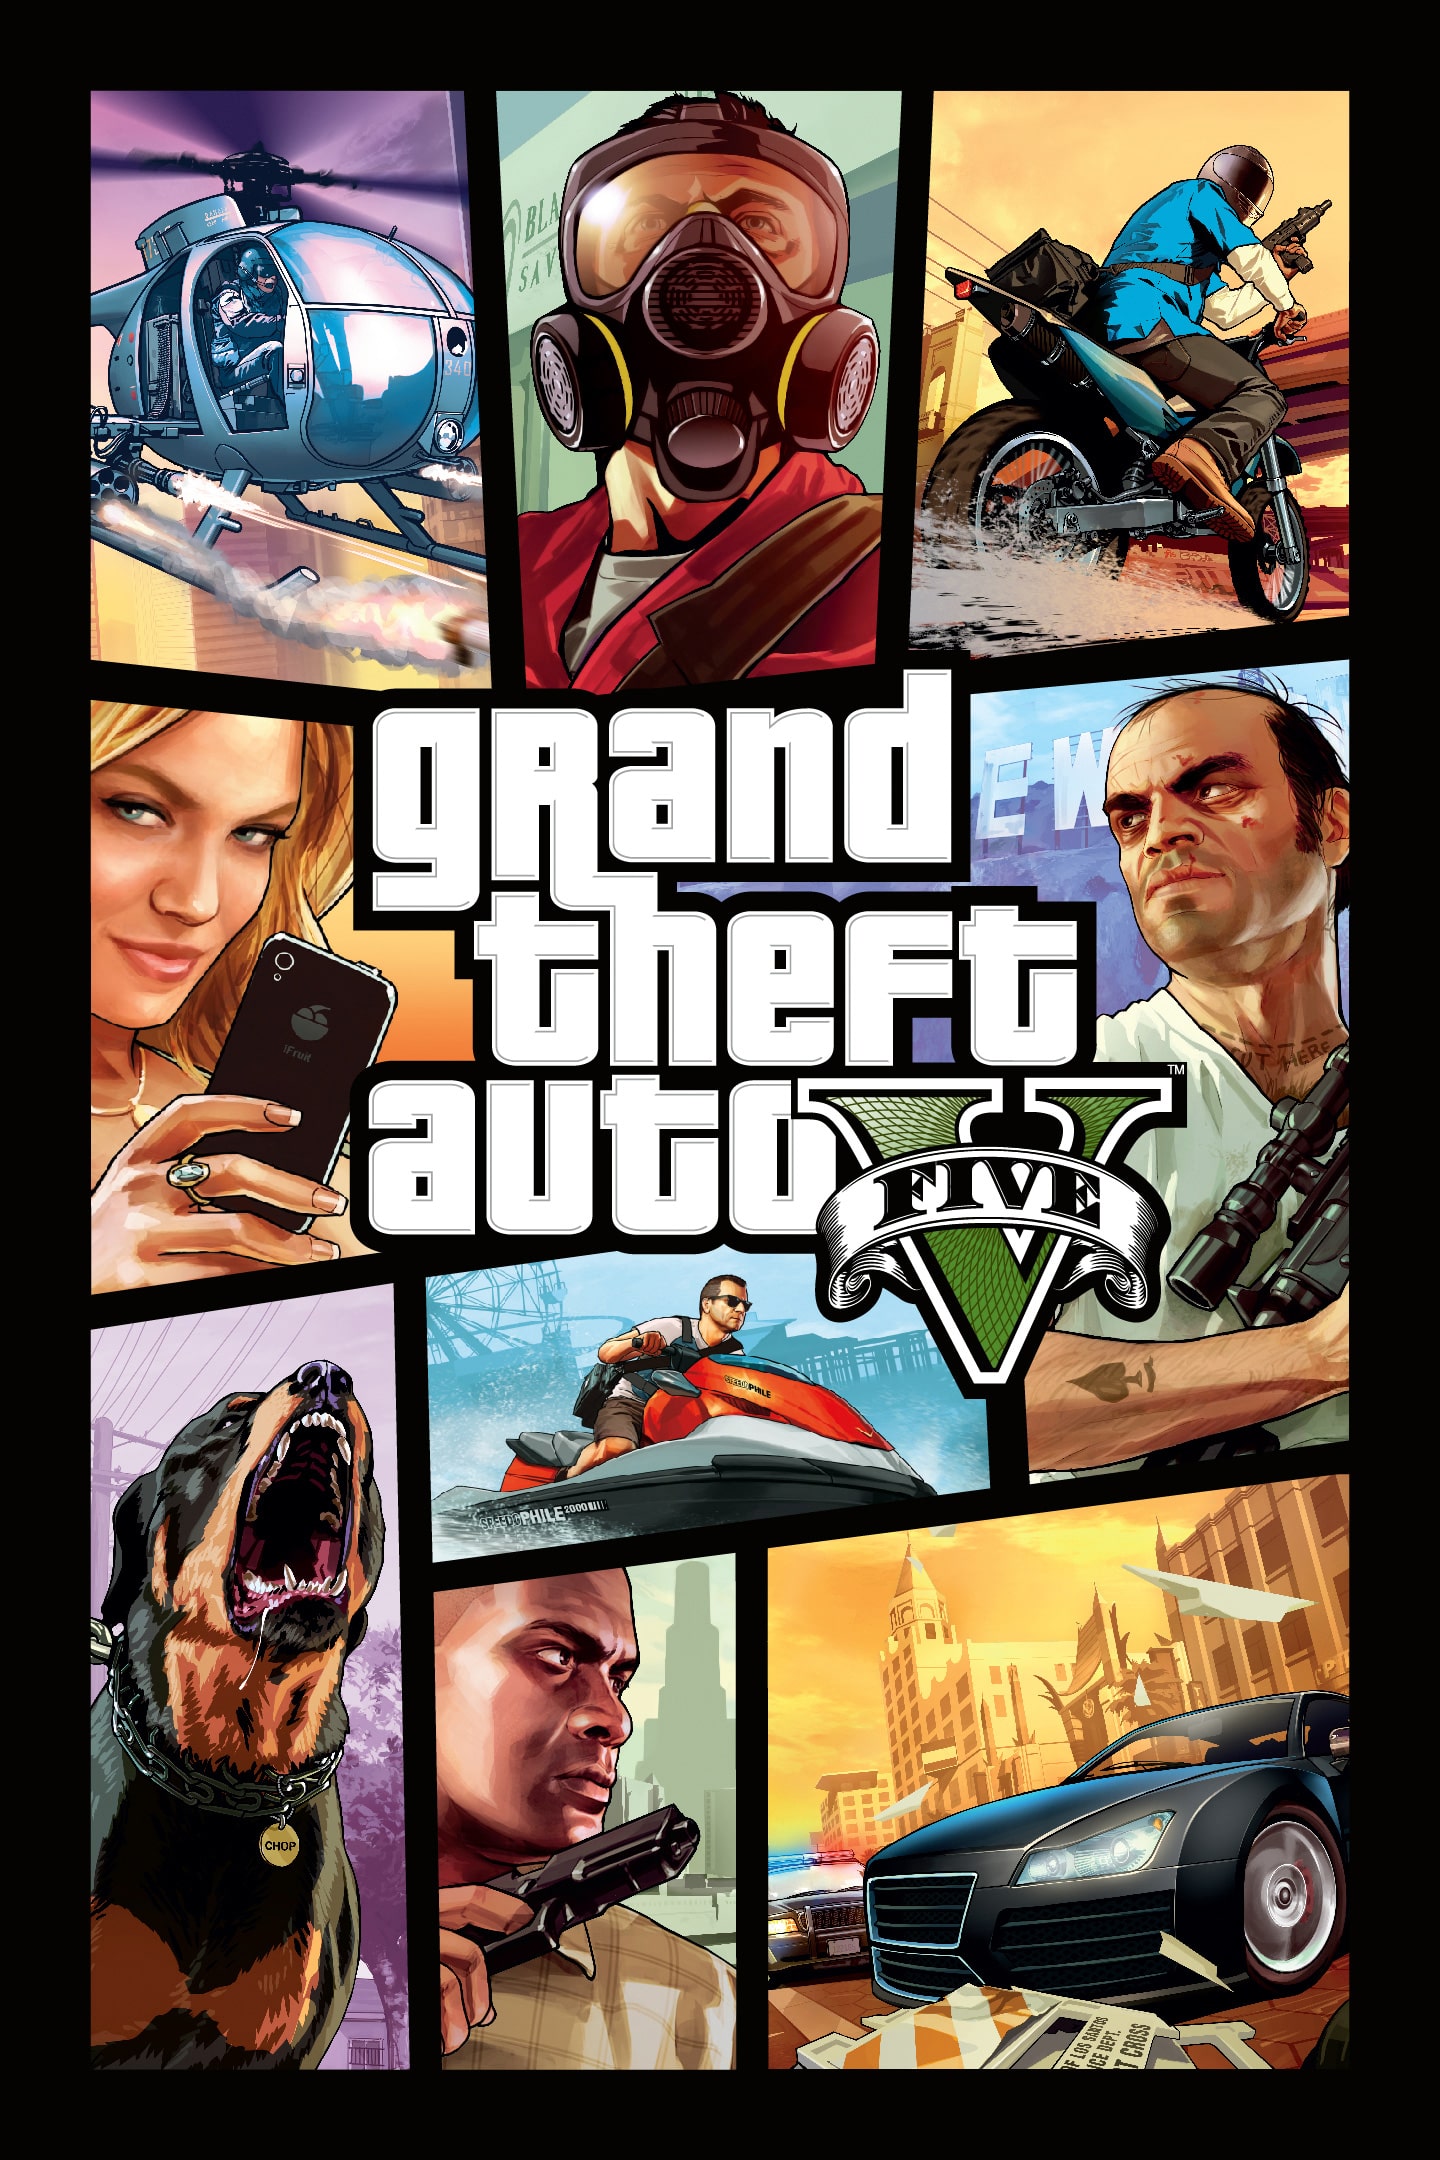 Console PlayStation 5 Standard Edition + Jogo Grand Theft Auto V